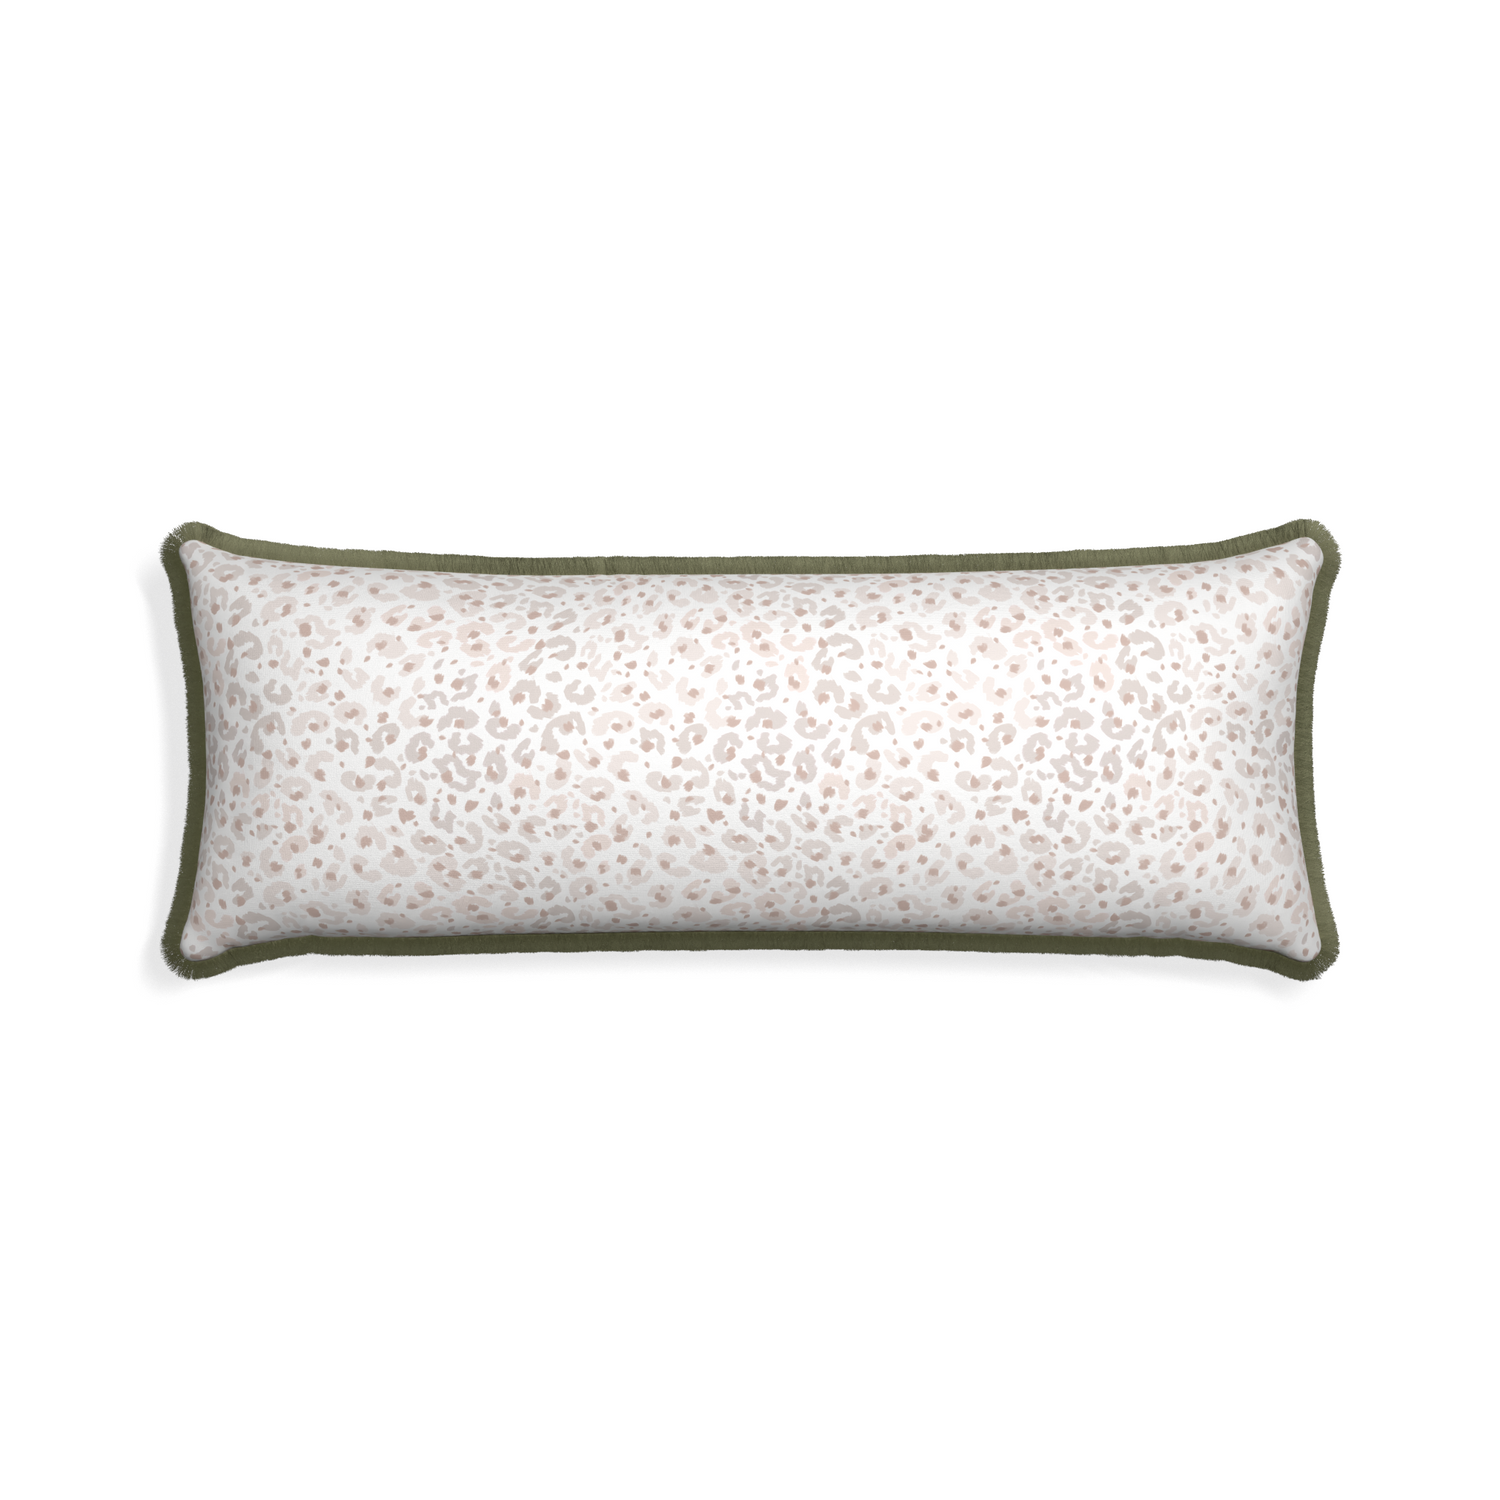 Xl-lumbar rosie custom pillow with sage fringe on white background